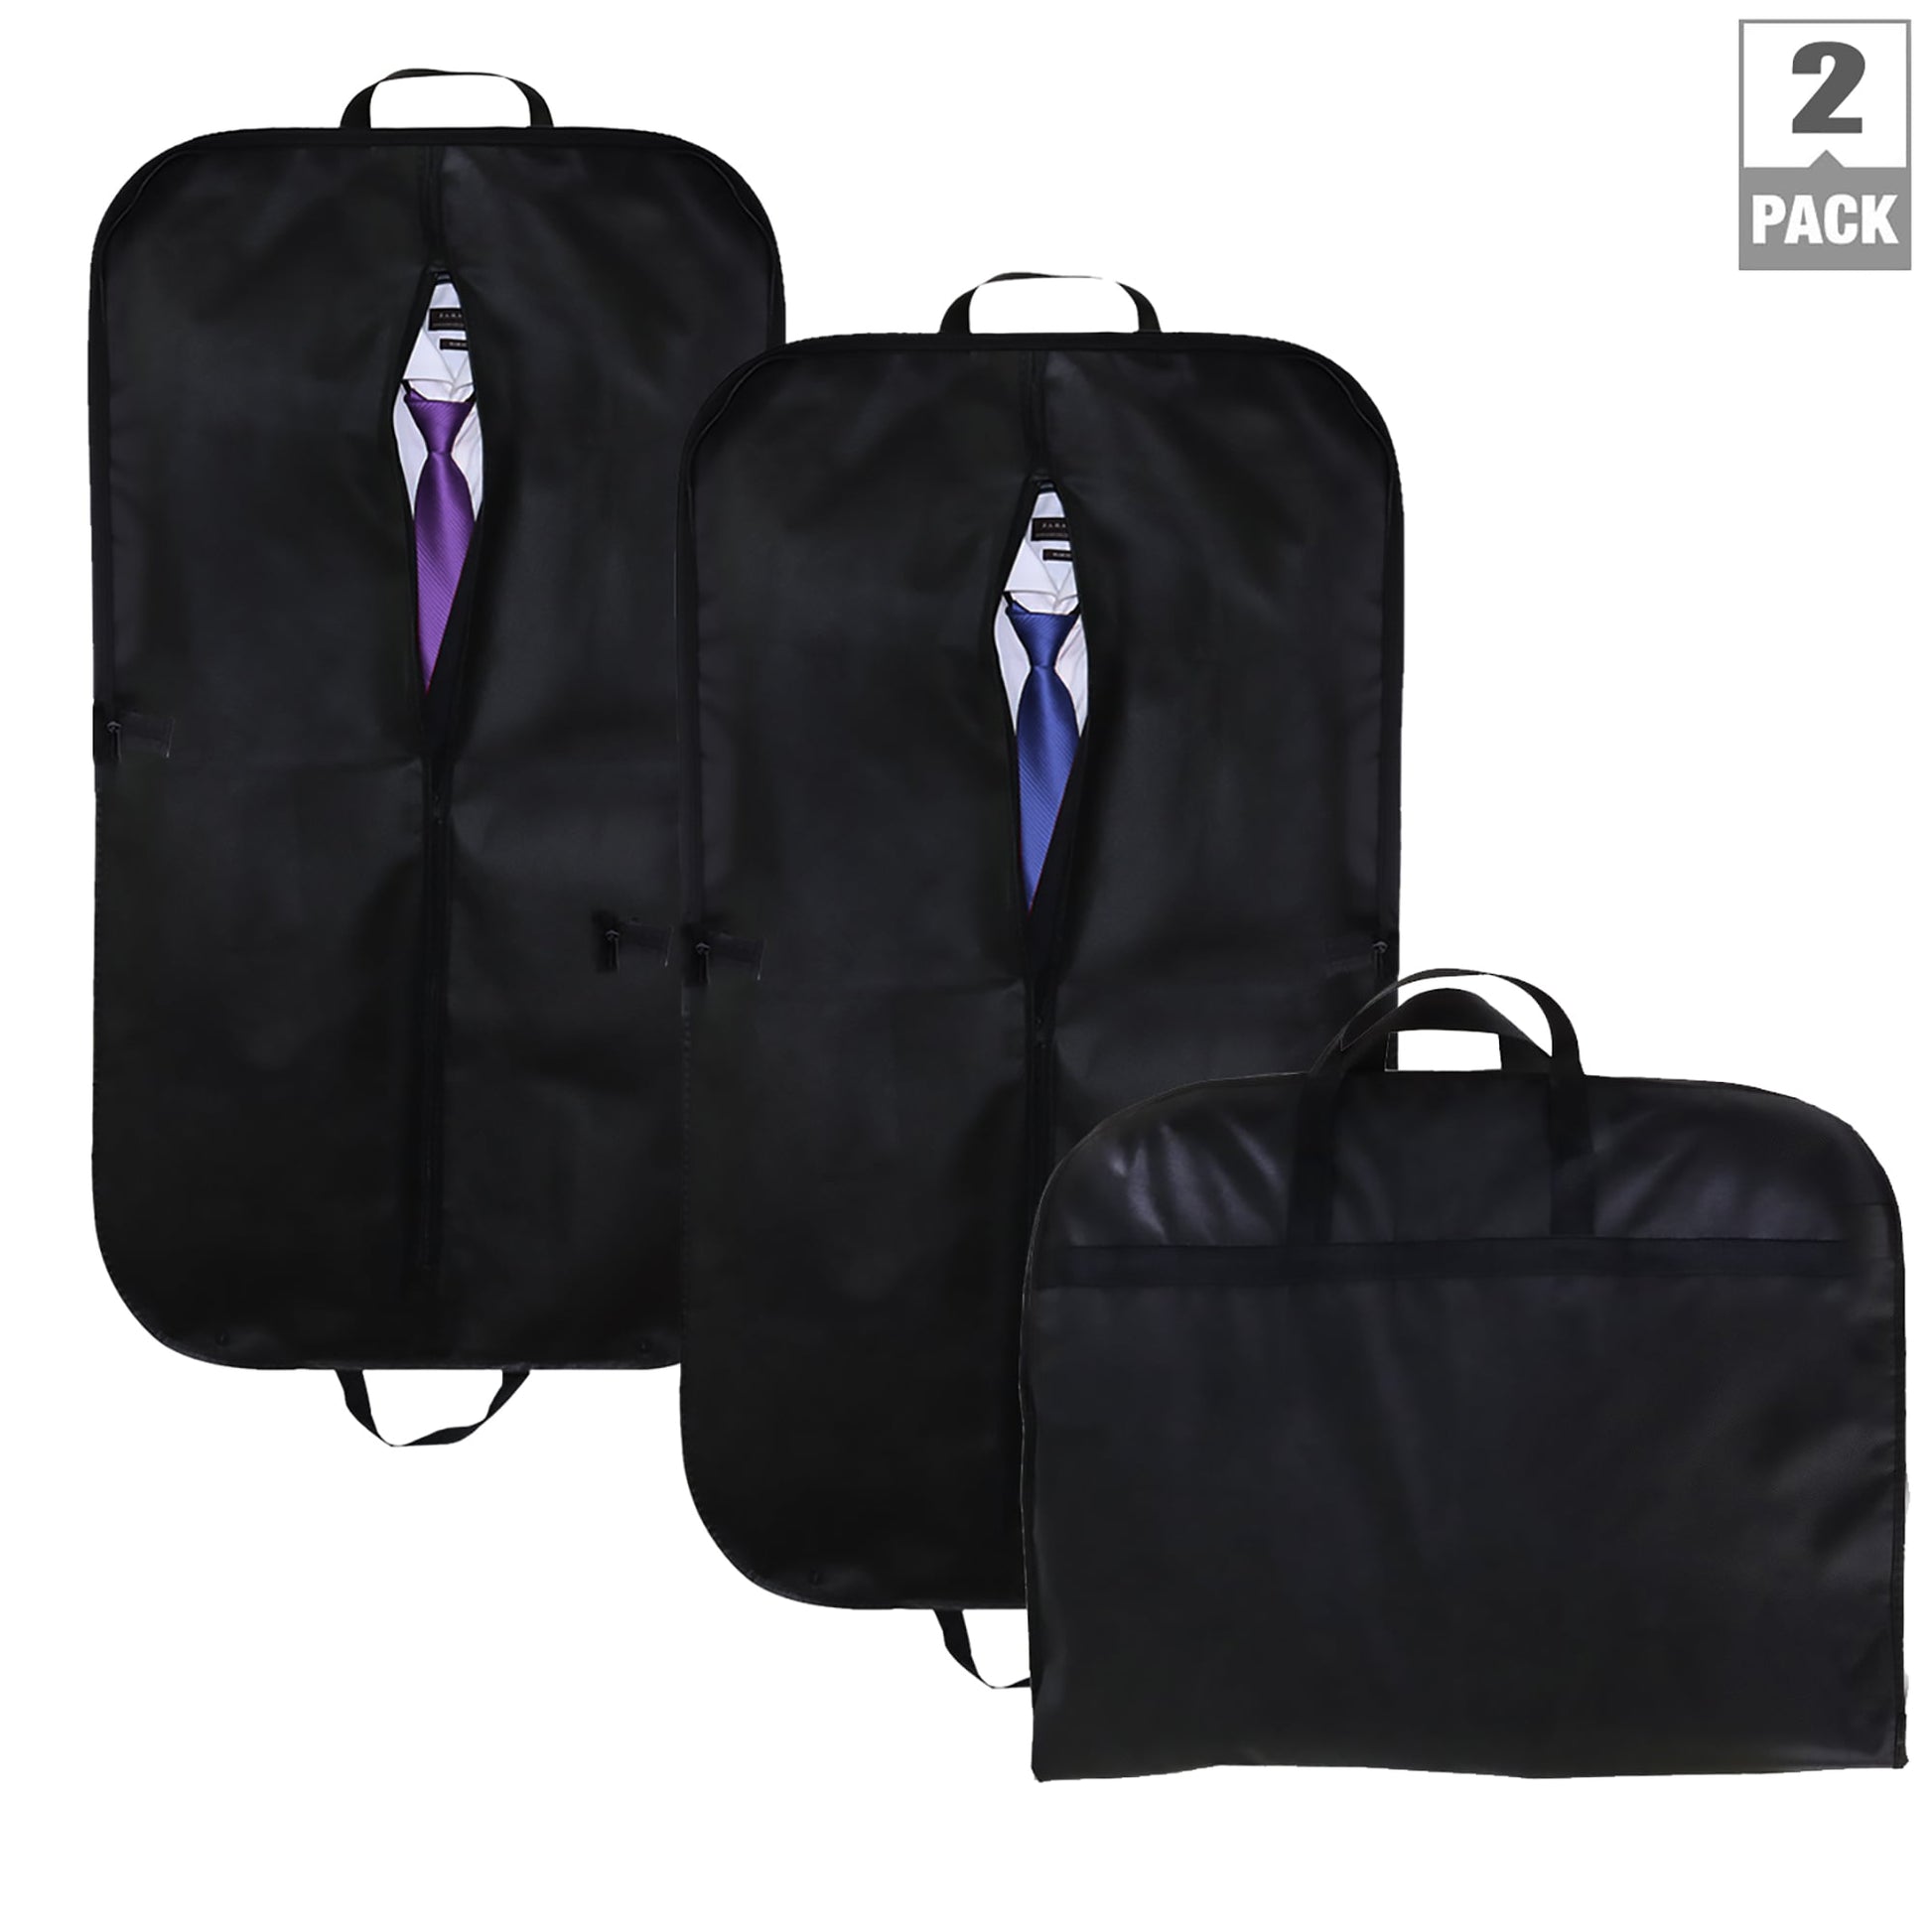 ROMUCHE 40 Black Garment Bags Premium Garment Bag with zipper